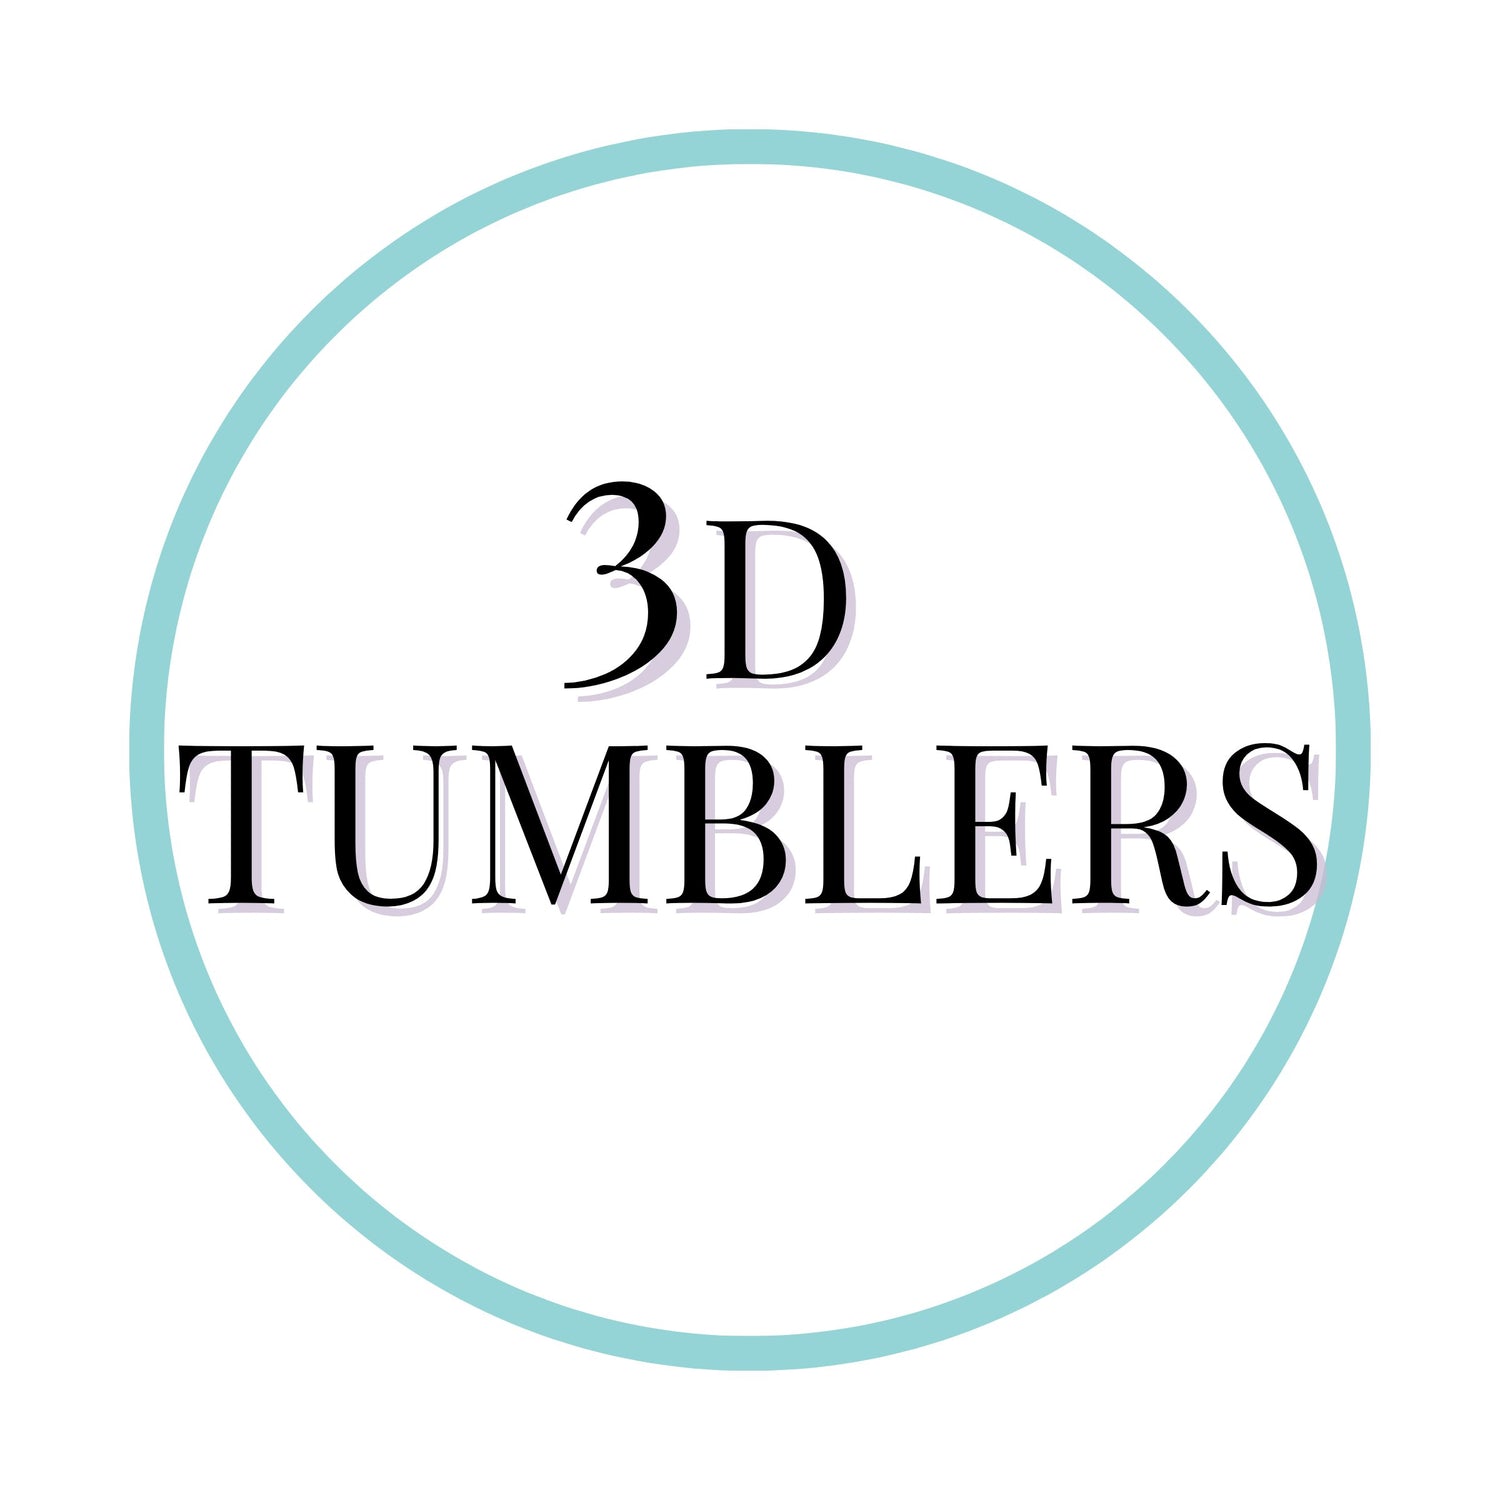 3D Tumblers by Cheyenne & Beth